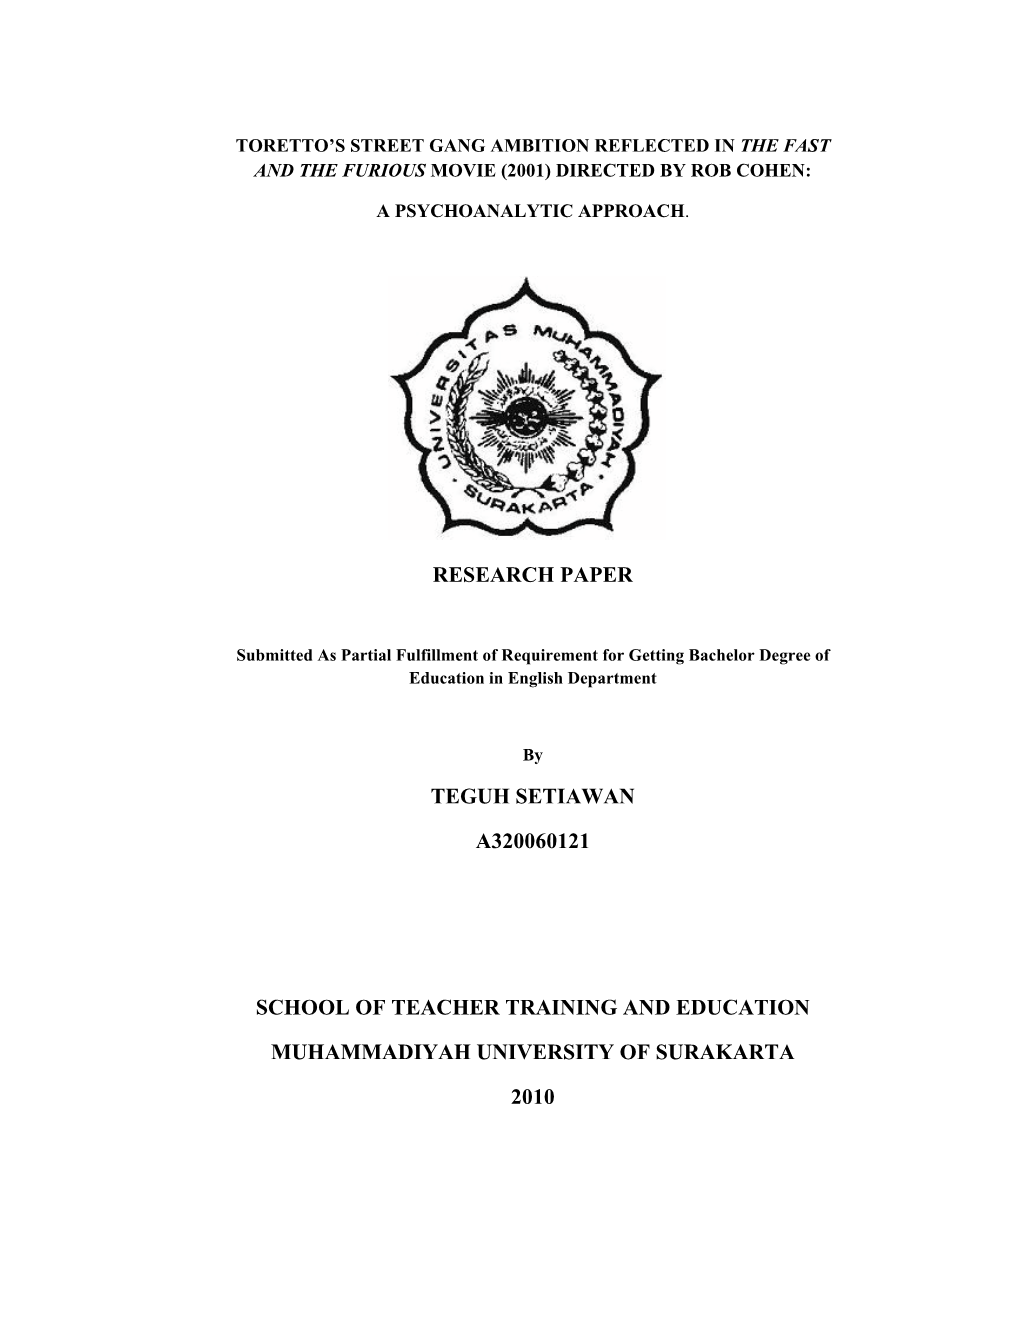 Research Paper Teguh Setiawan A320060121 School